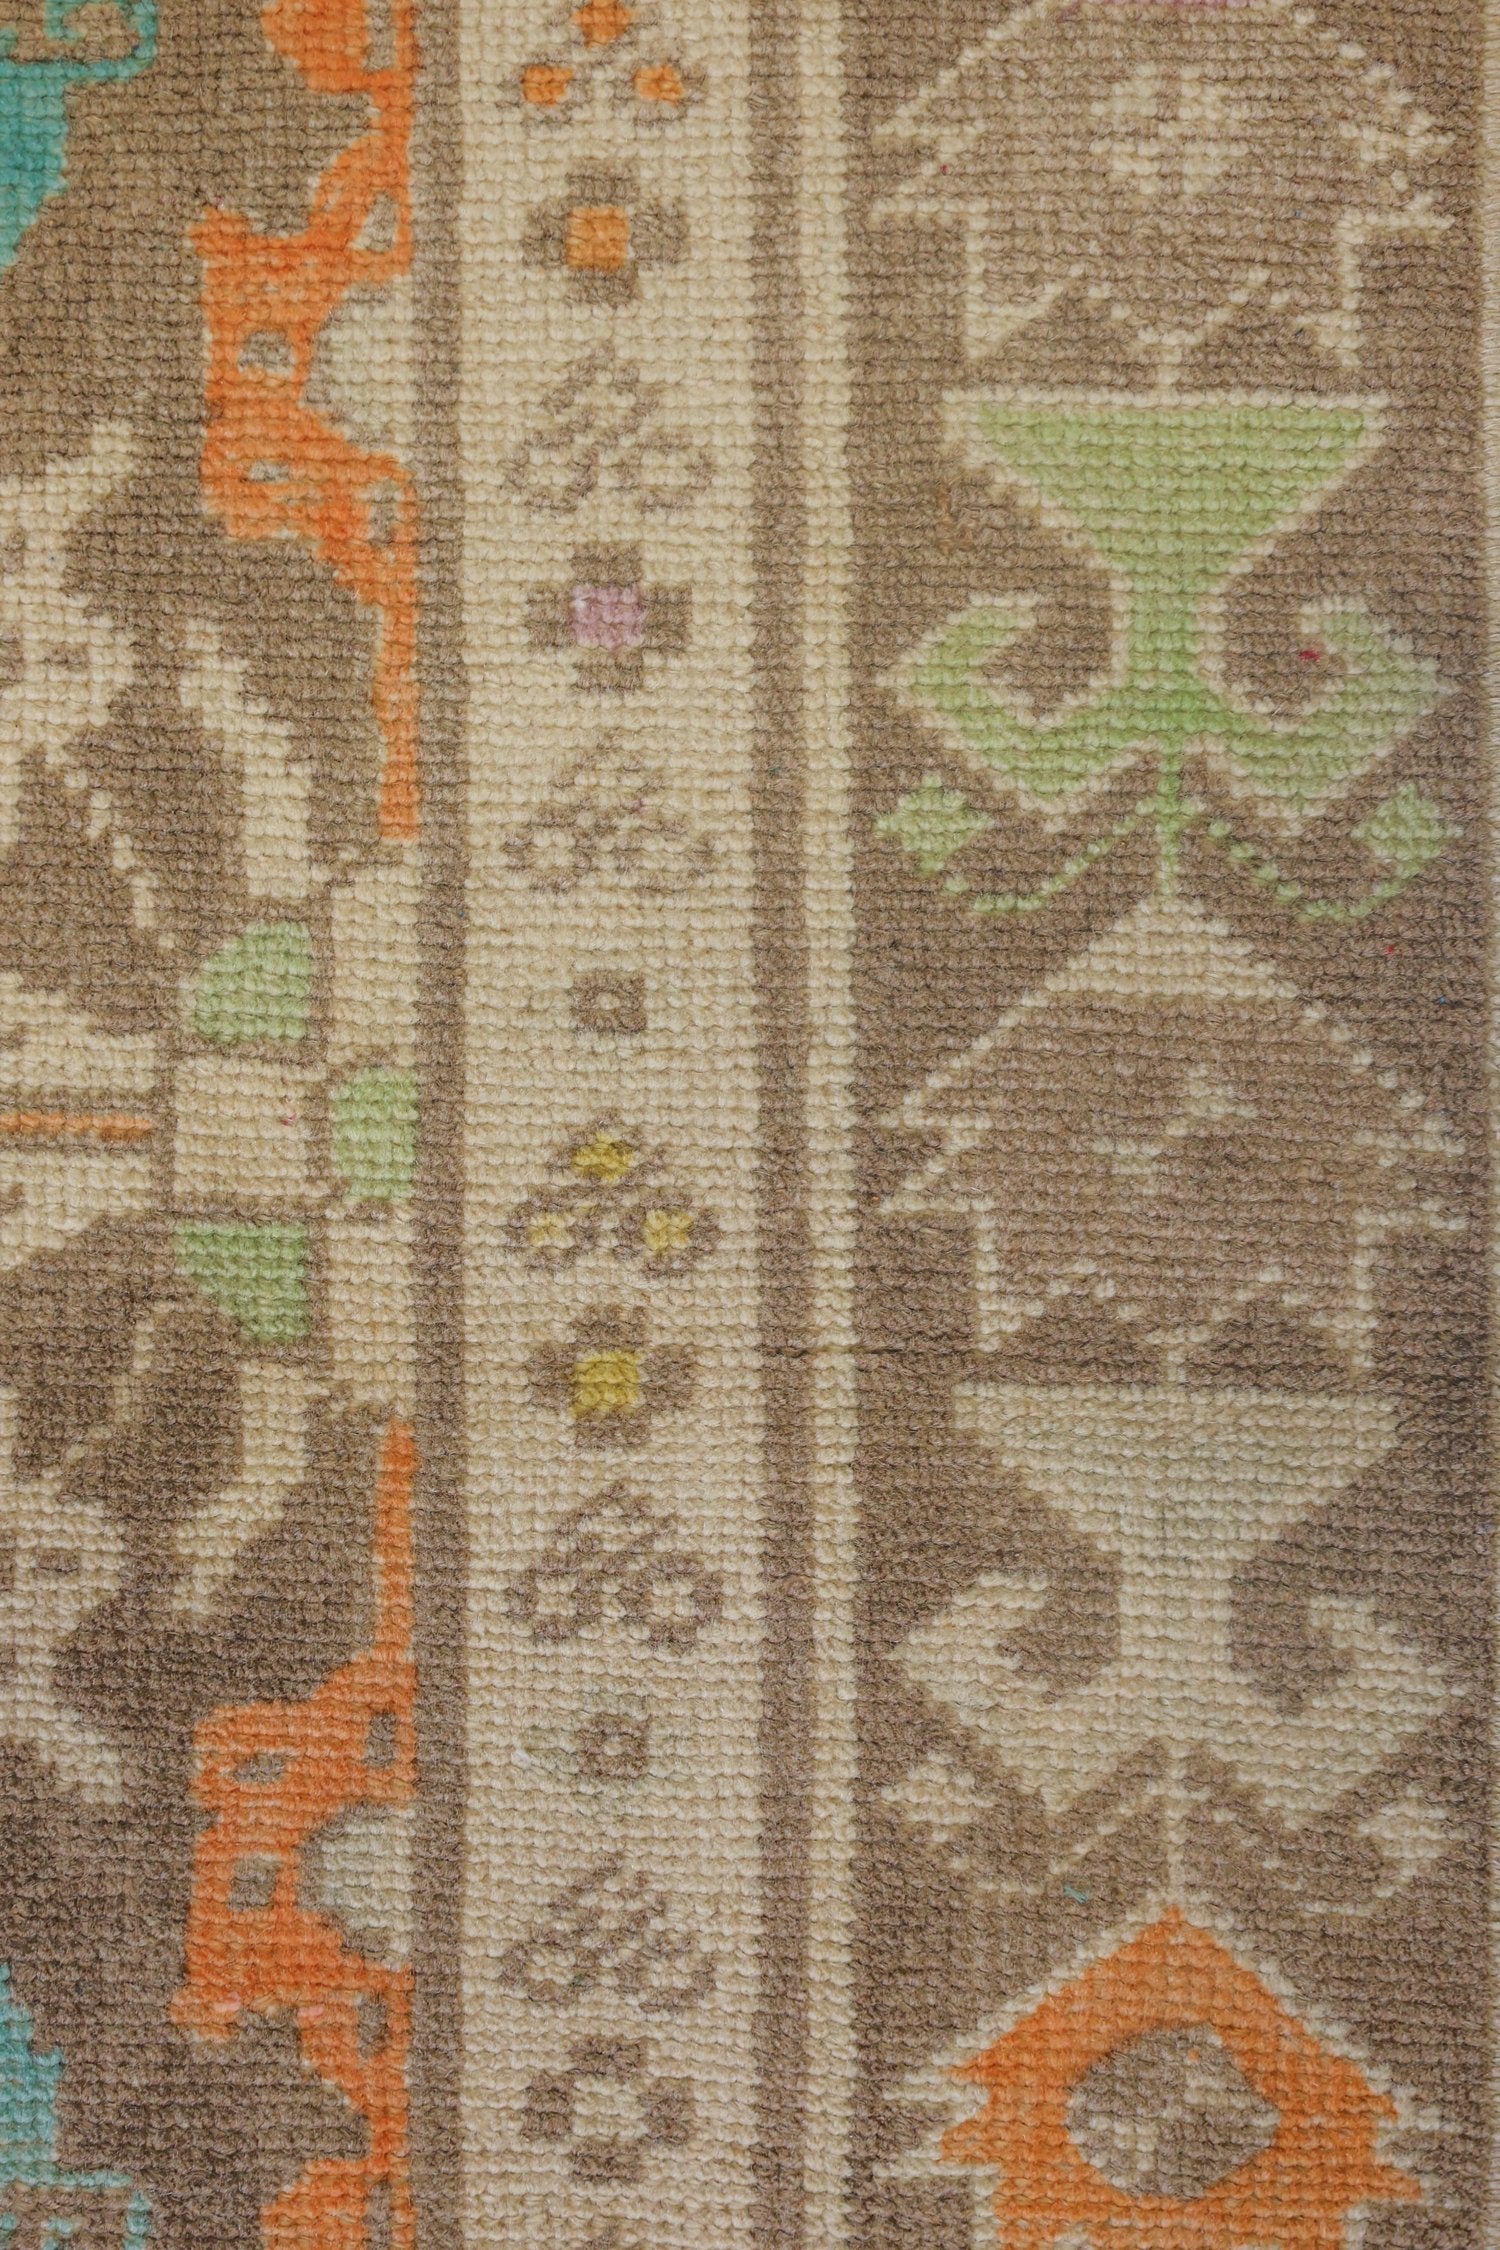 Vintage Konya Handwoven Tribal Rug, J70749